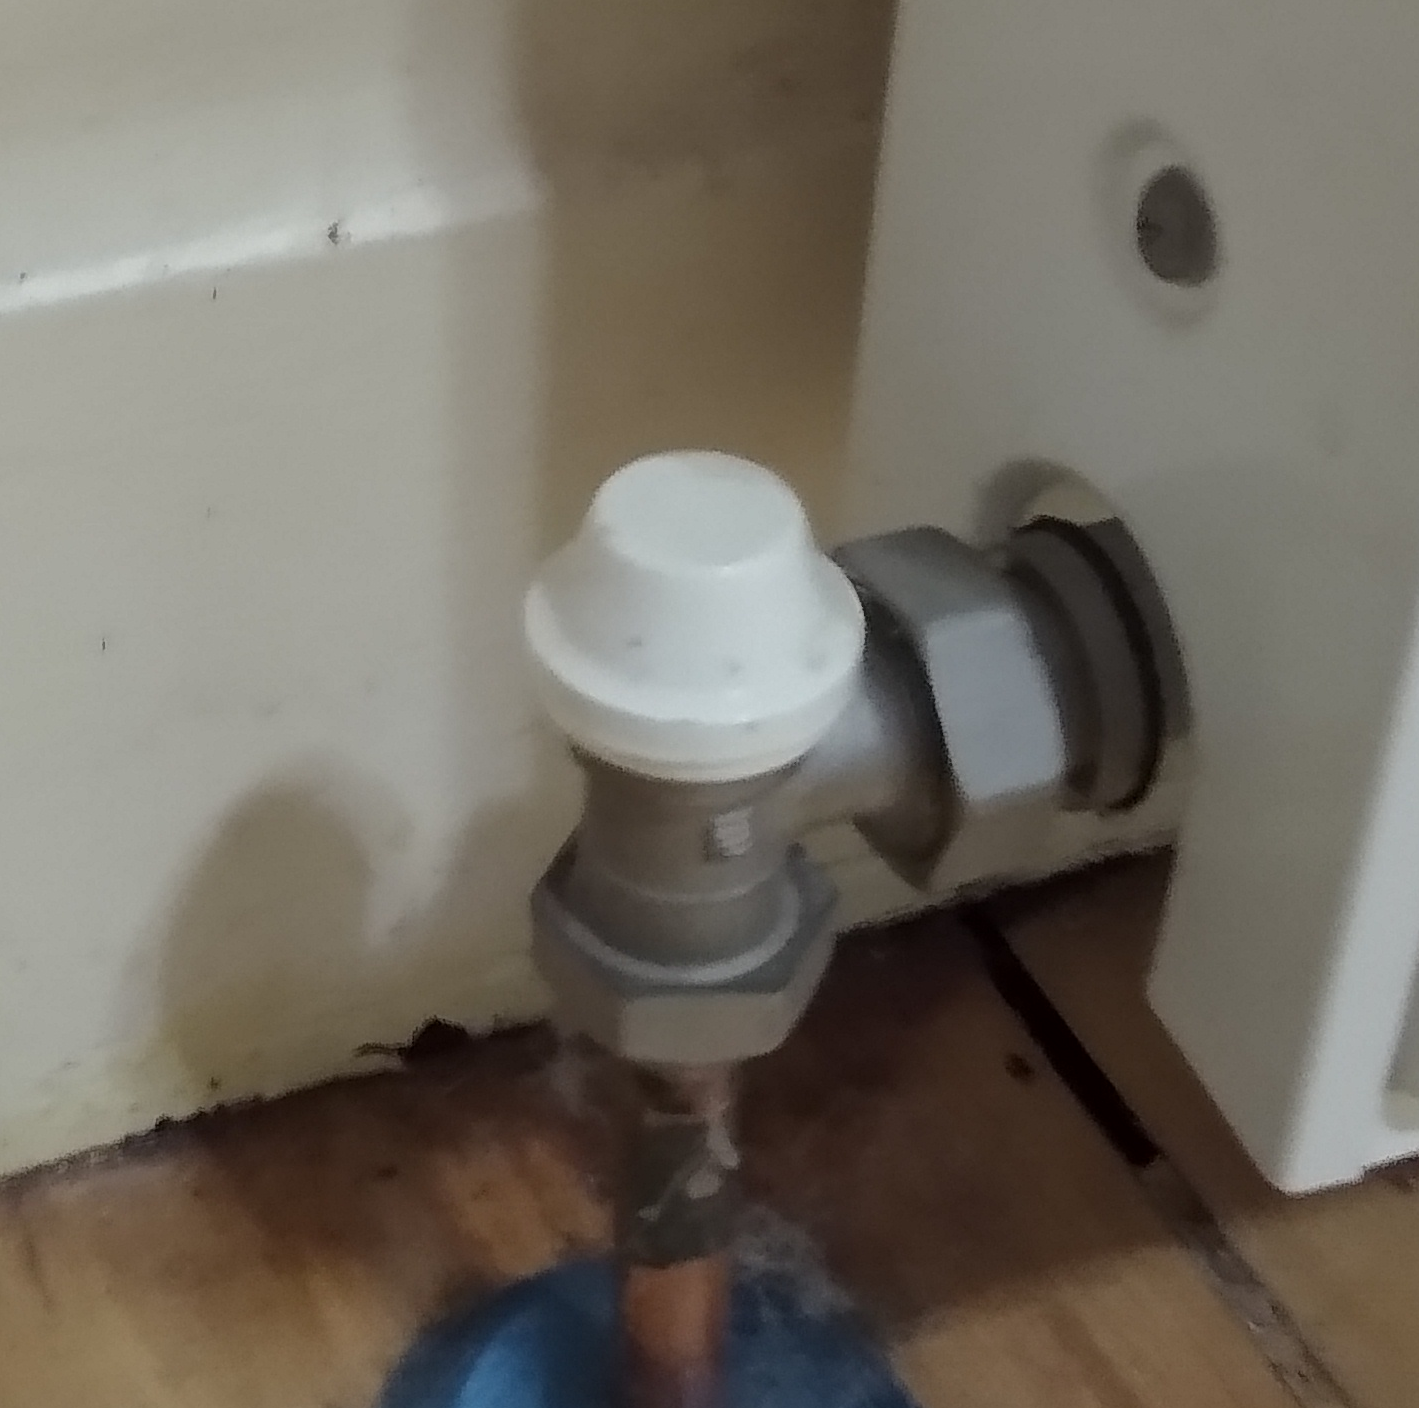 radiator balancing valve